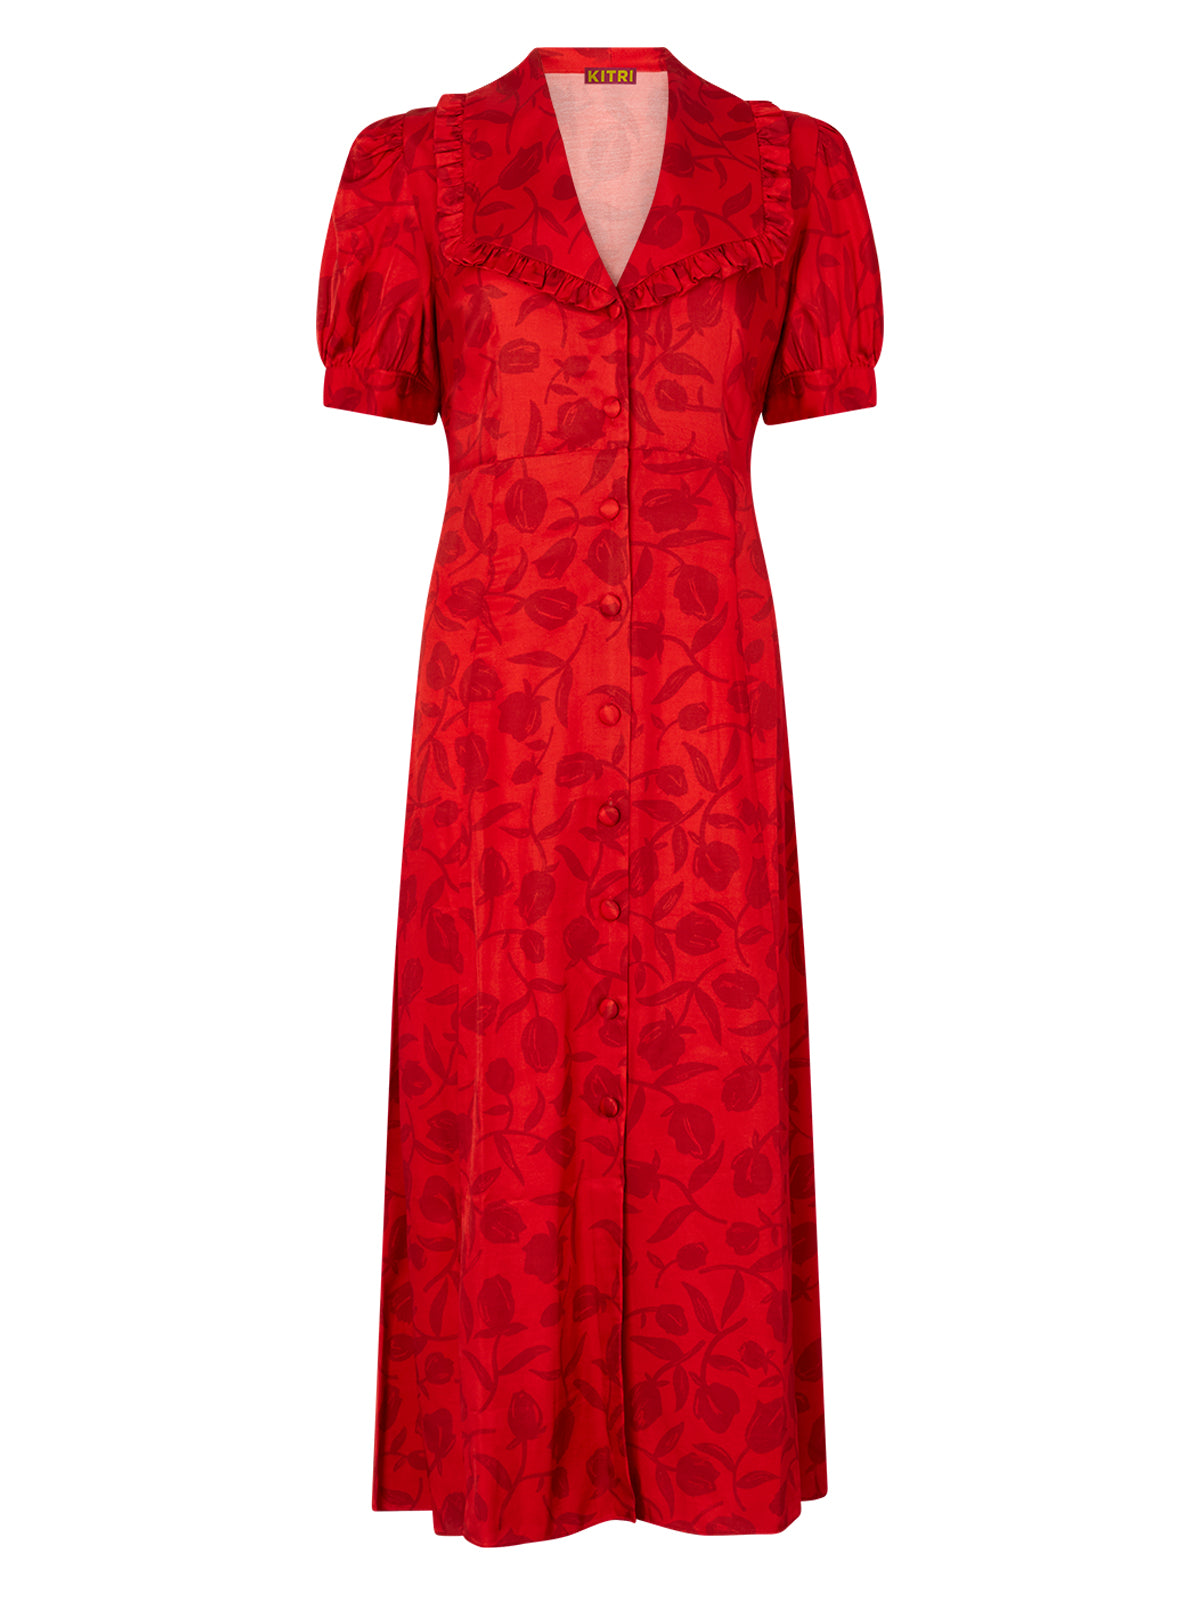 Bethany Red Tulip Print Tea Dress By KITRI Studio